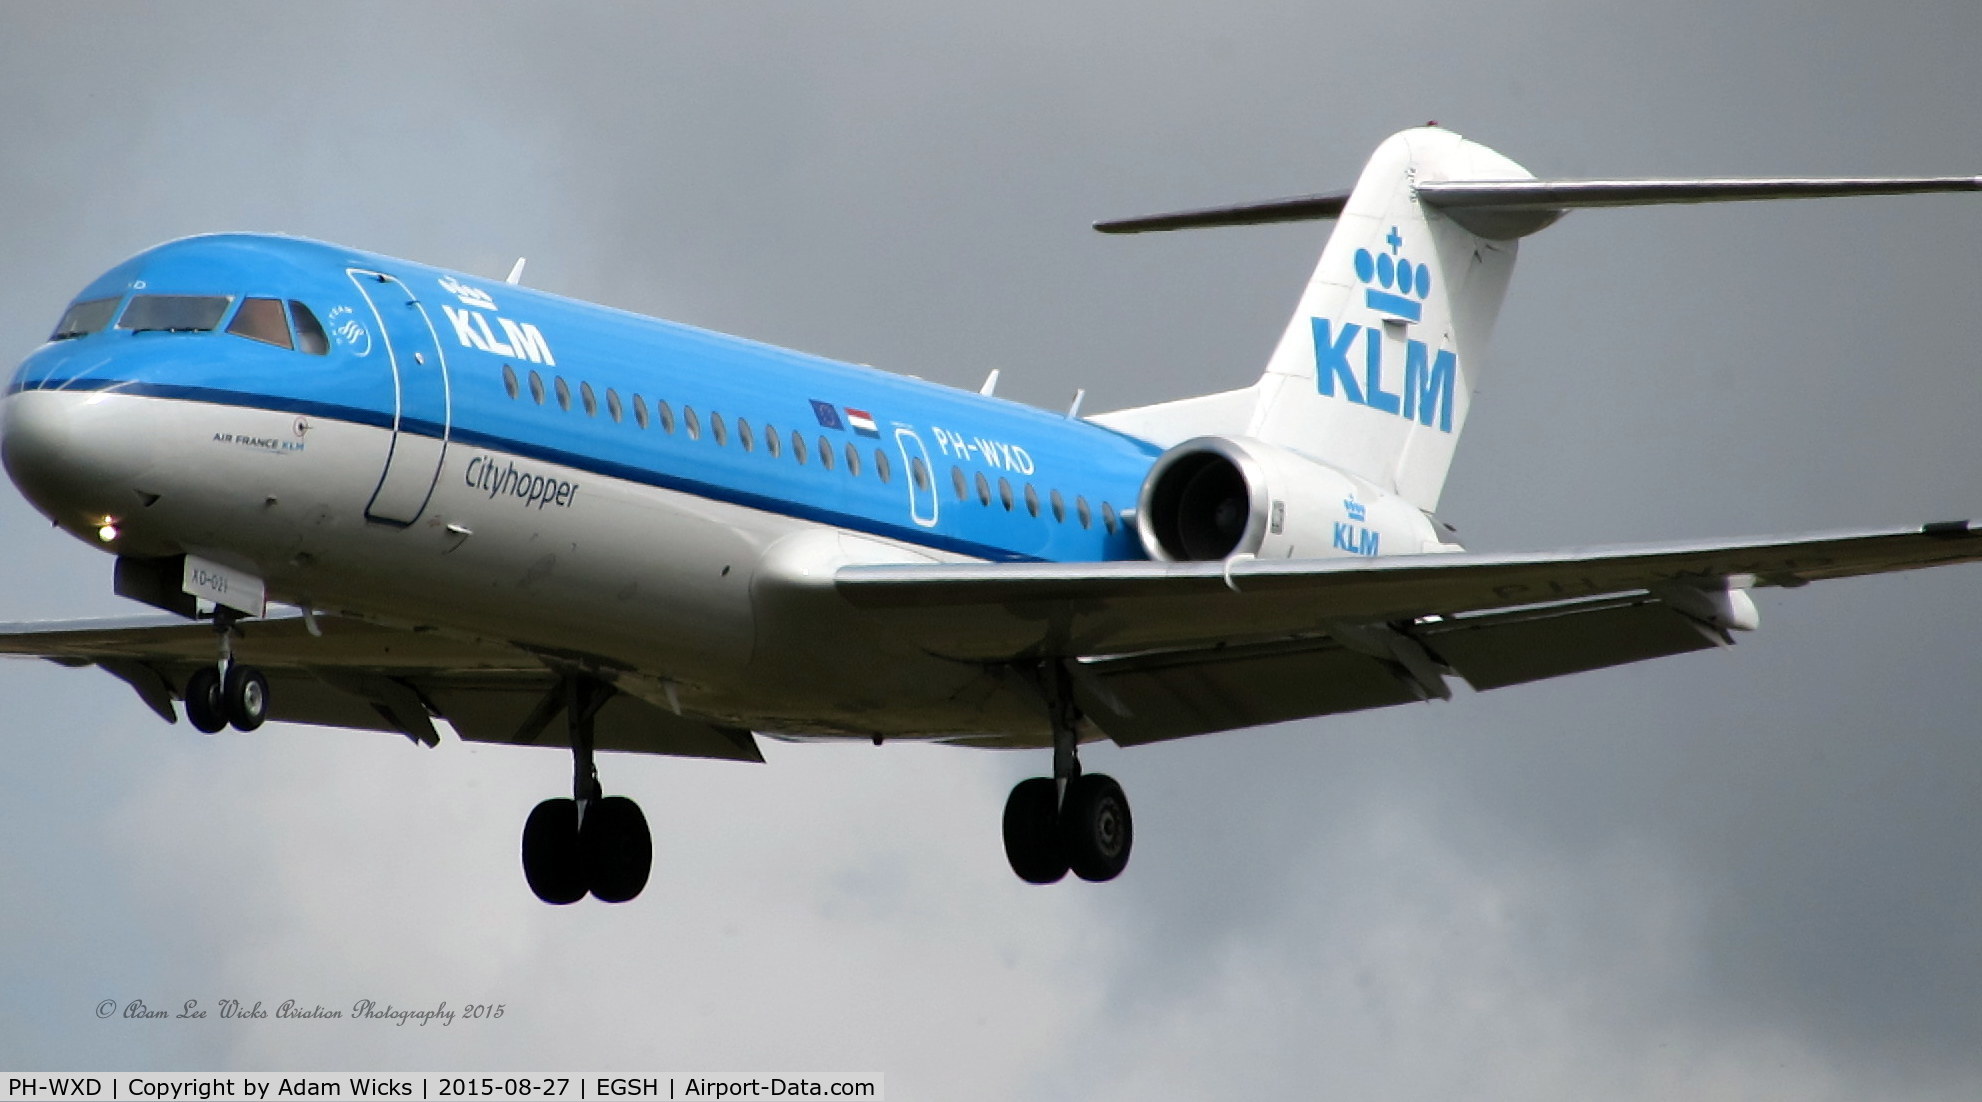 PH-WXD, 1995 Fokker 70 (F-28-0070) C/N 11563, KLM Fokker 70 Approach to Runway 27 R